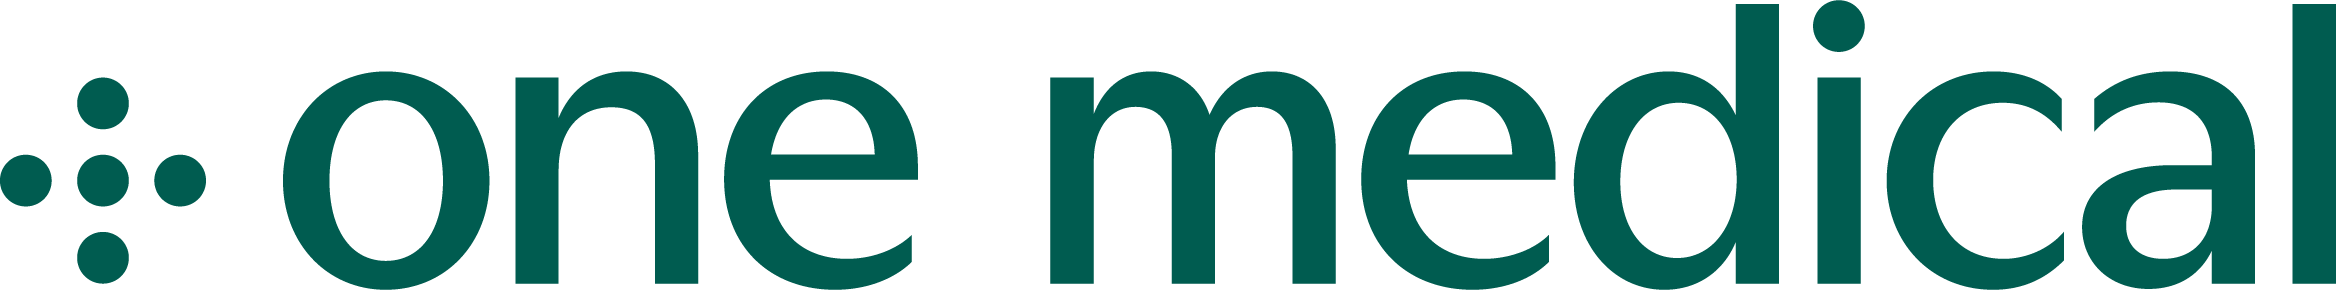 One Medical Logo.png